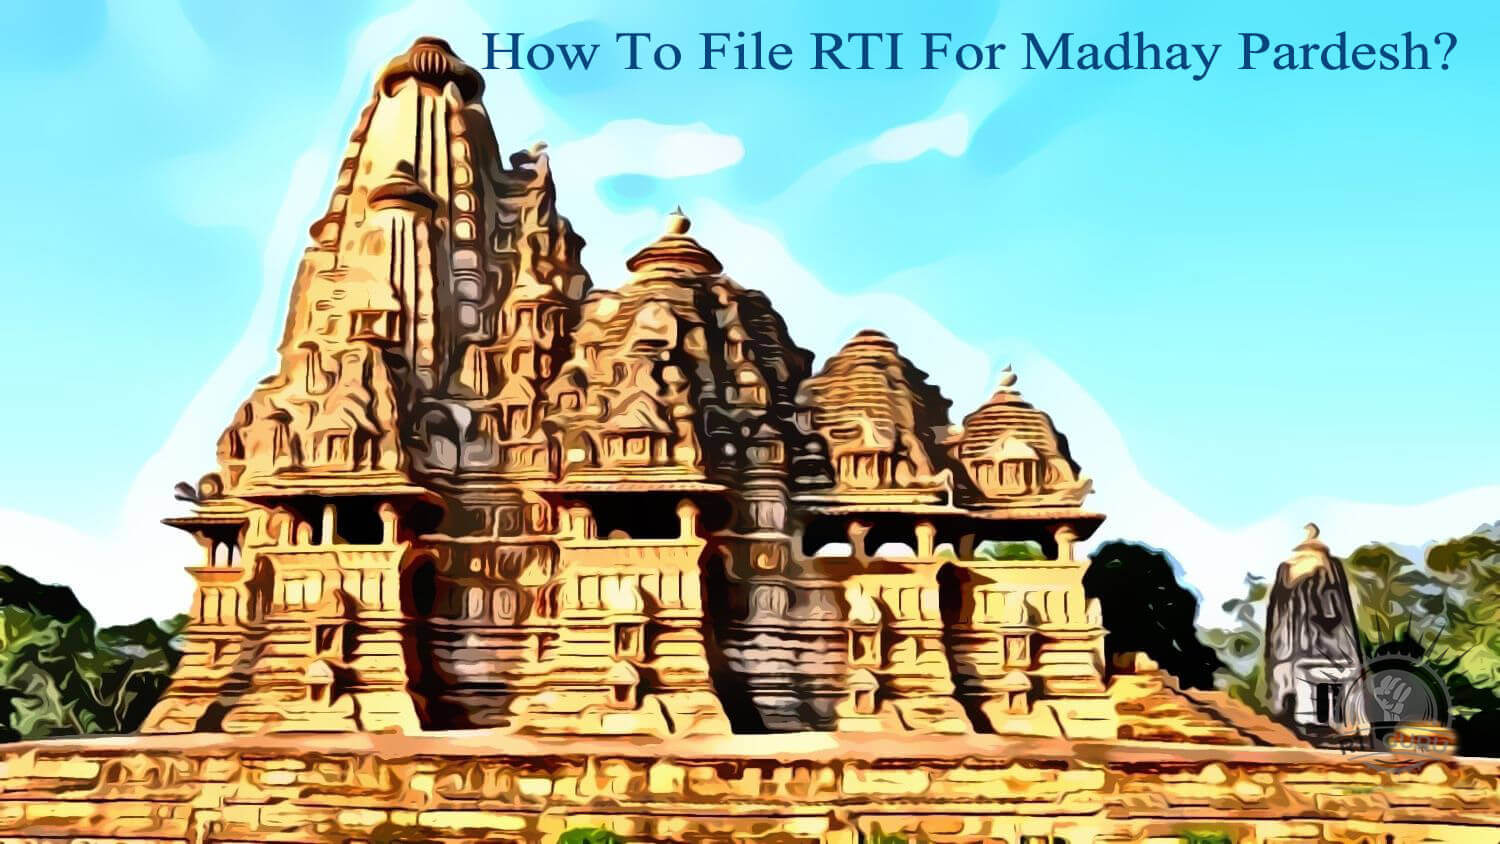 How to file RTI for Madhya Pradesh?